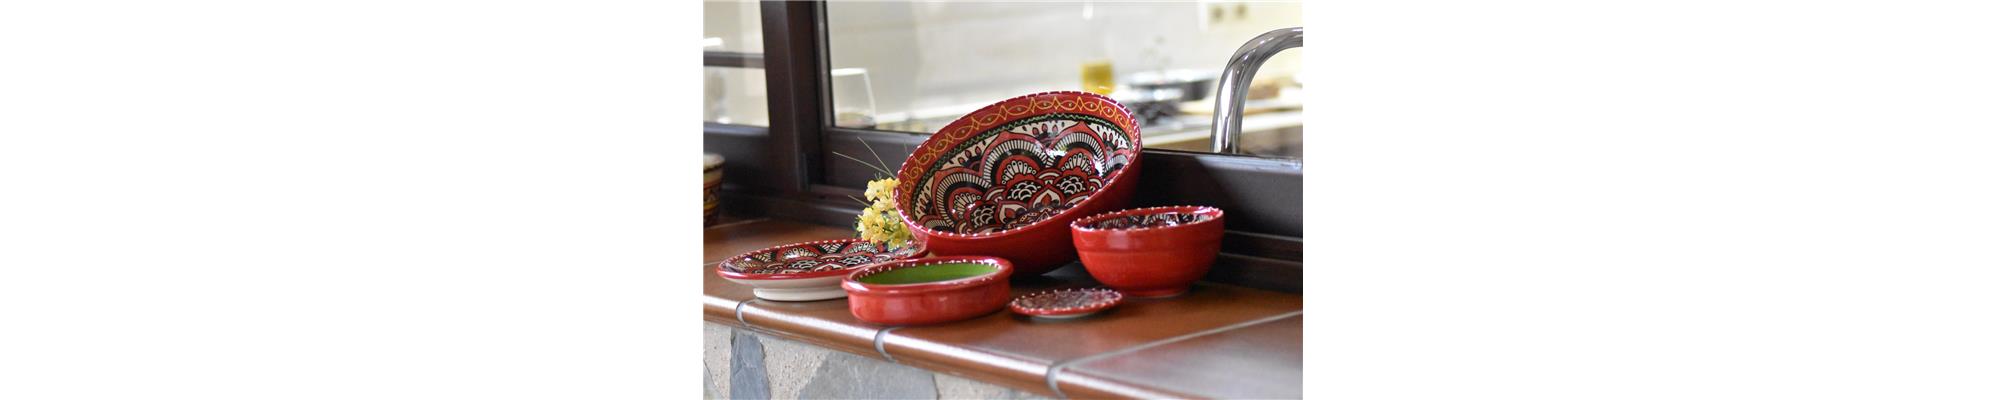 Artículos de cerámica artesanal para tu hogar